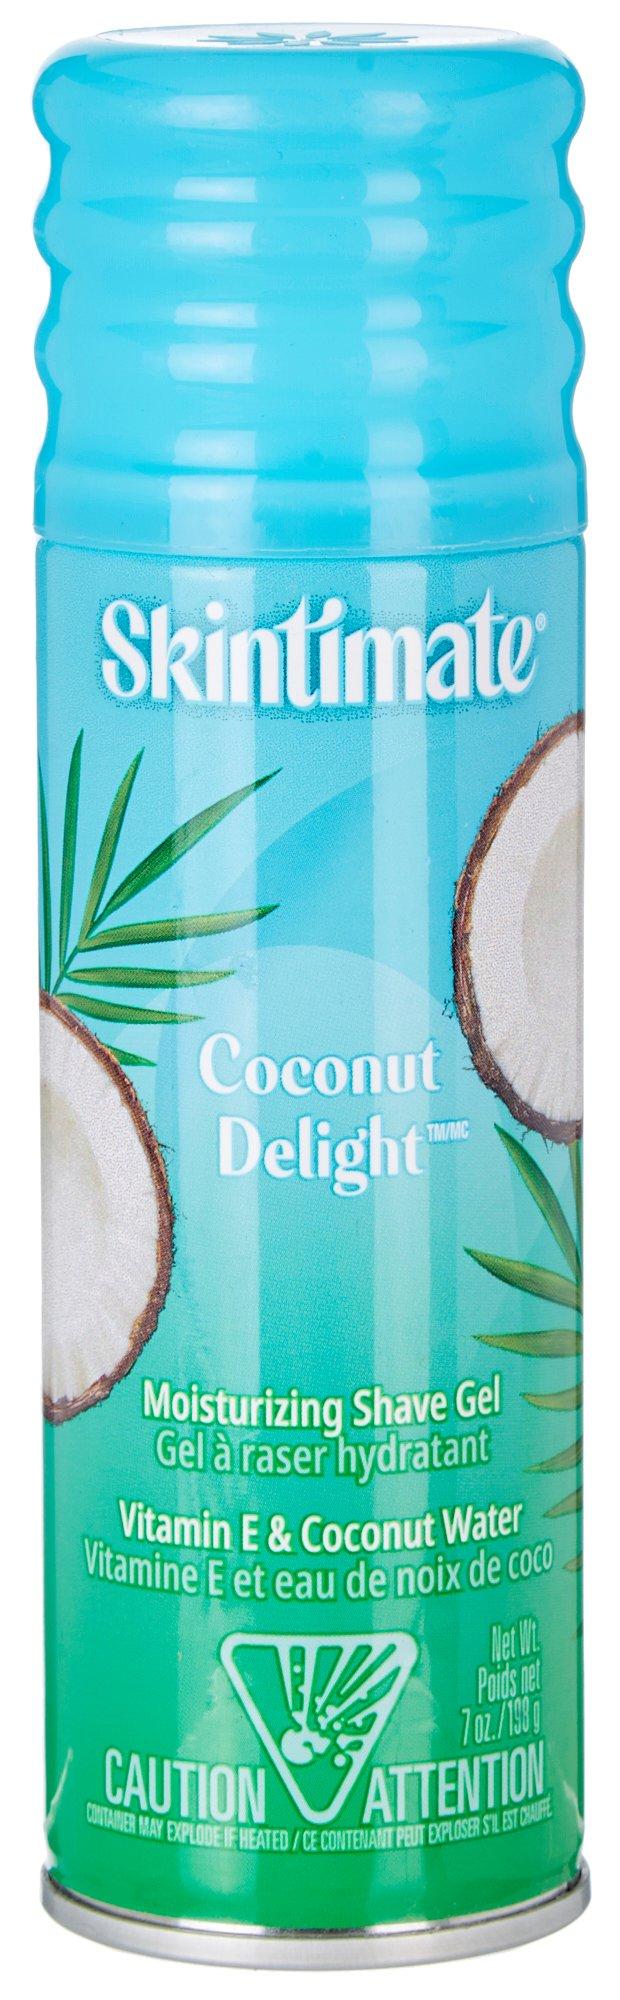 Skintimate Coconut Delight Moisturizing Shave Gel 7 oz.